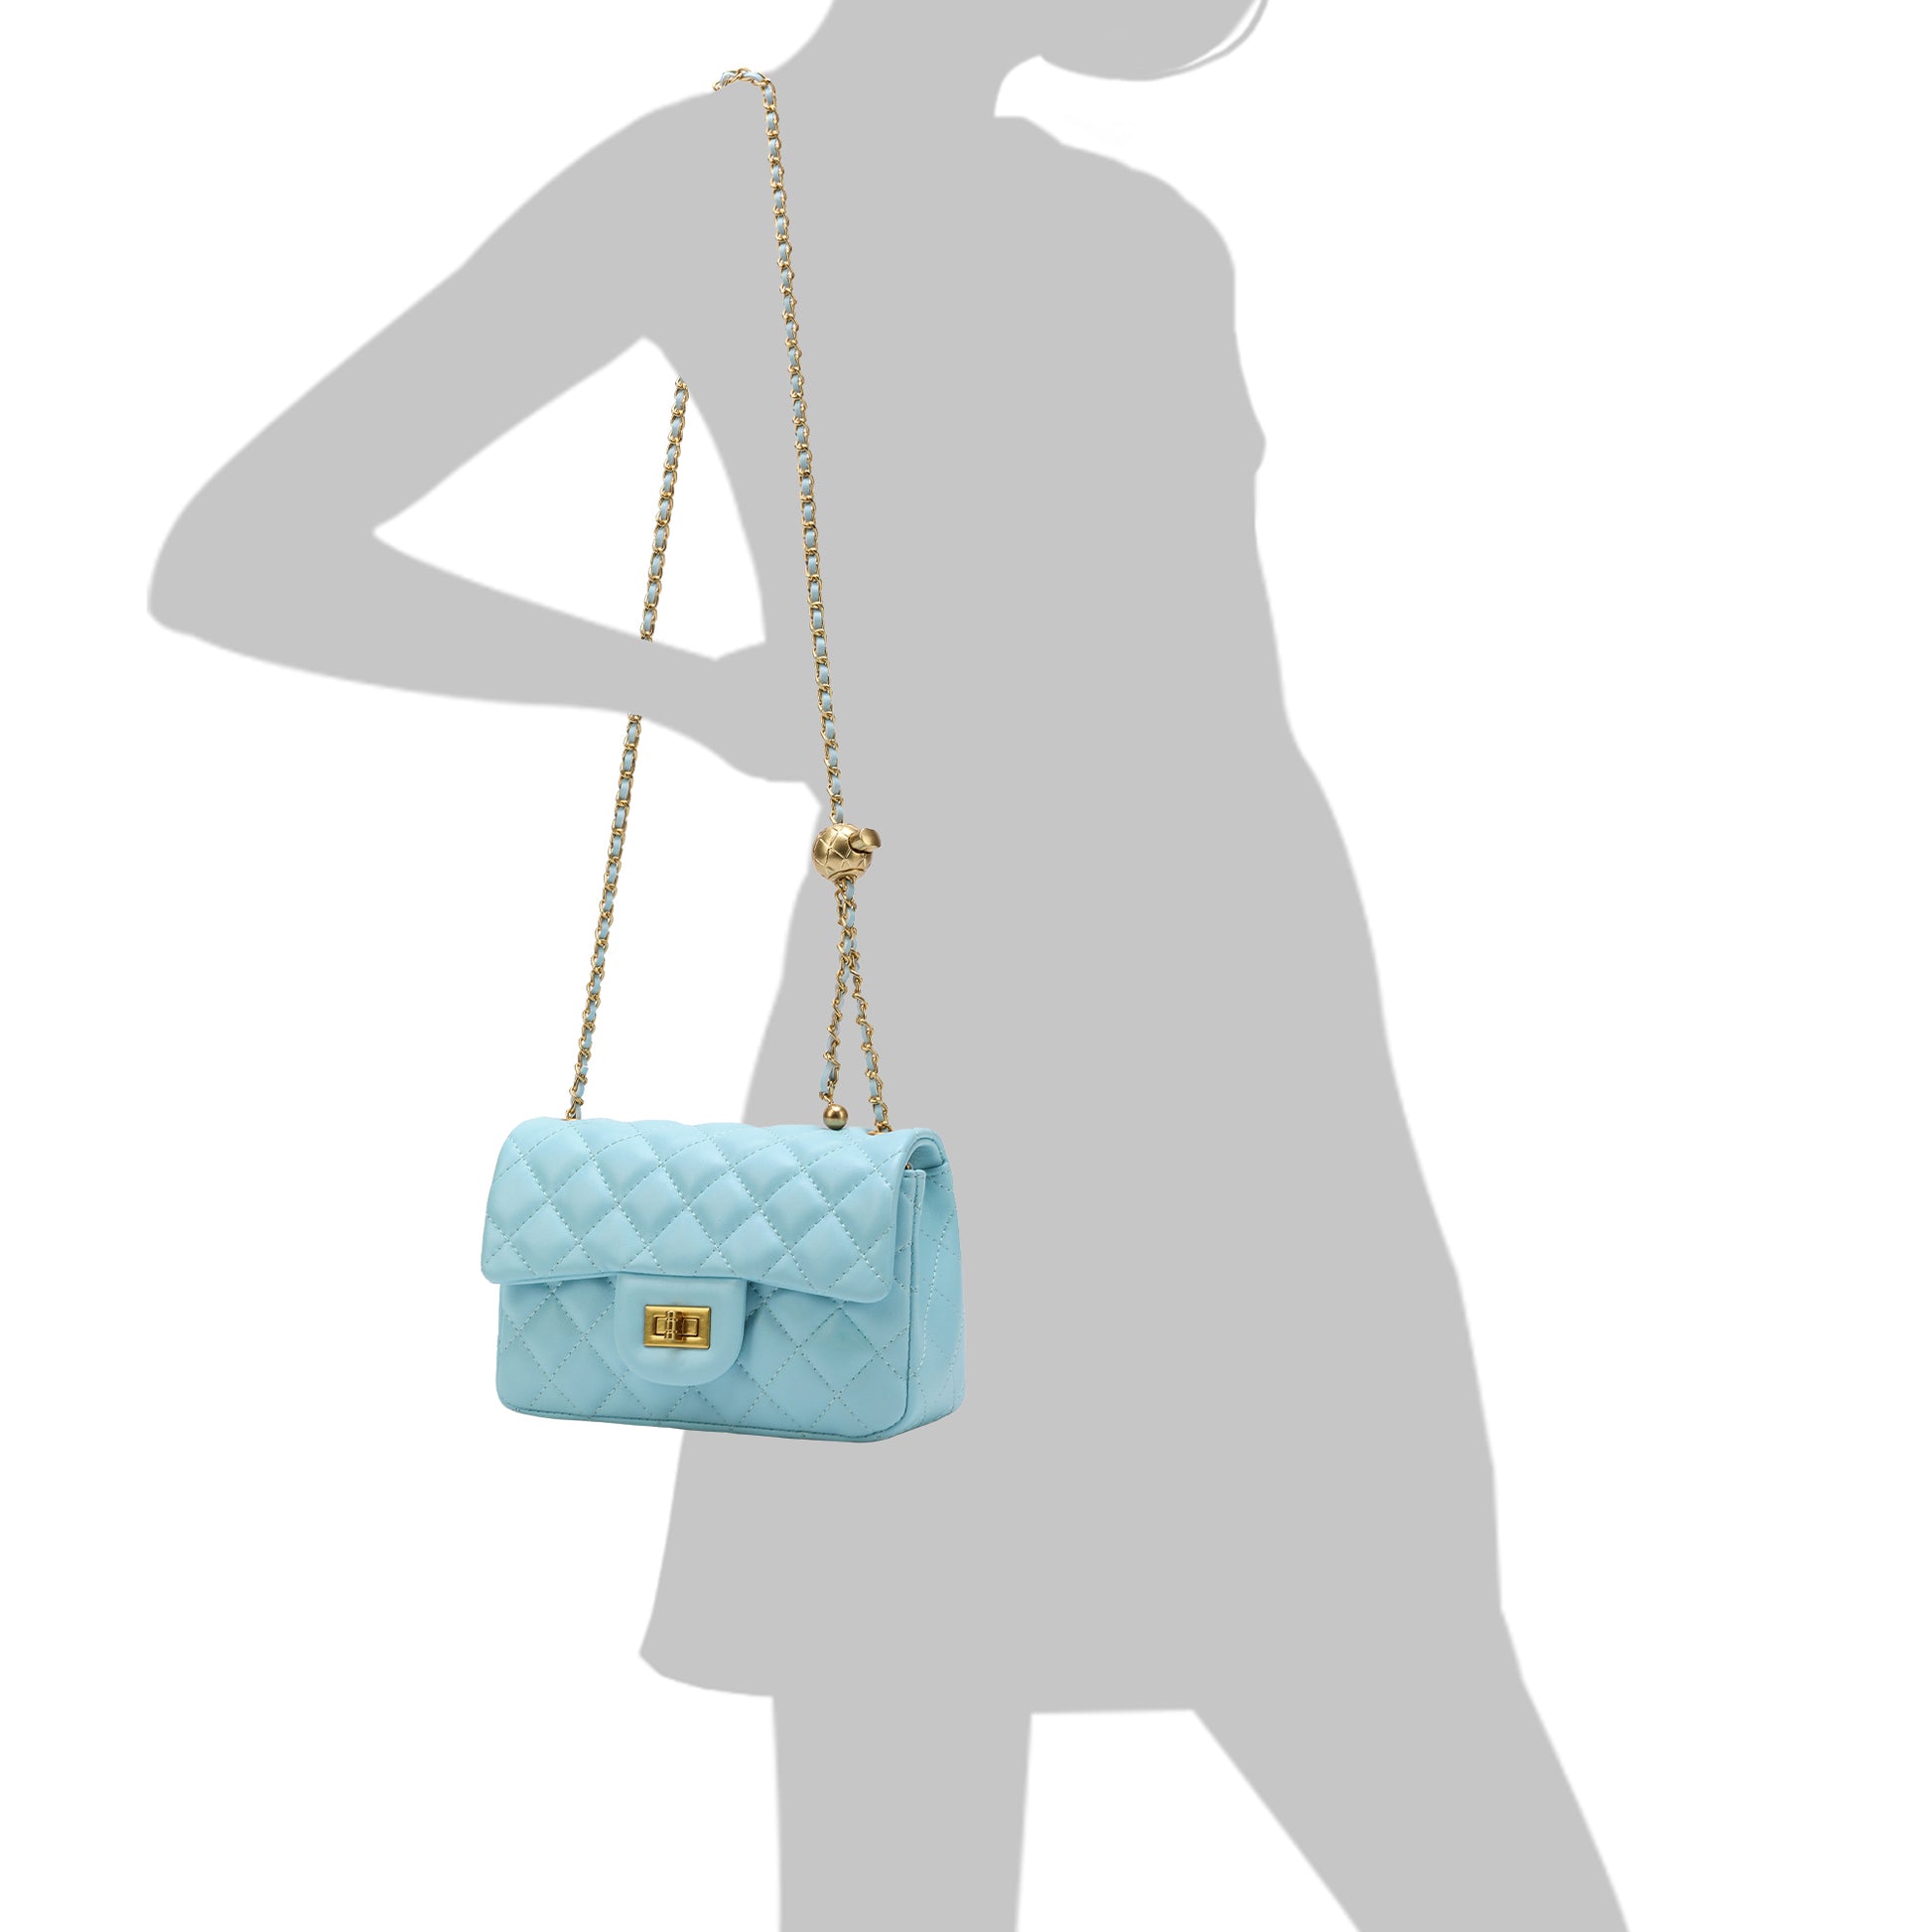 Wholesale Gift Bag- Medium- 4 Assorted Colors TIFFANY BLUE HOT PINK/LT BLUE/LT  PINL